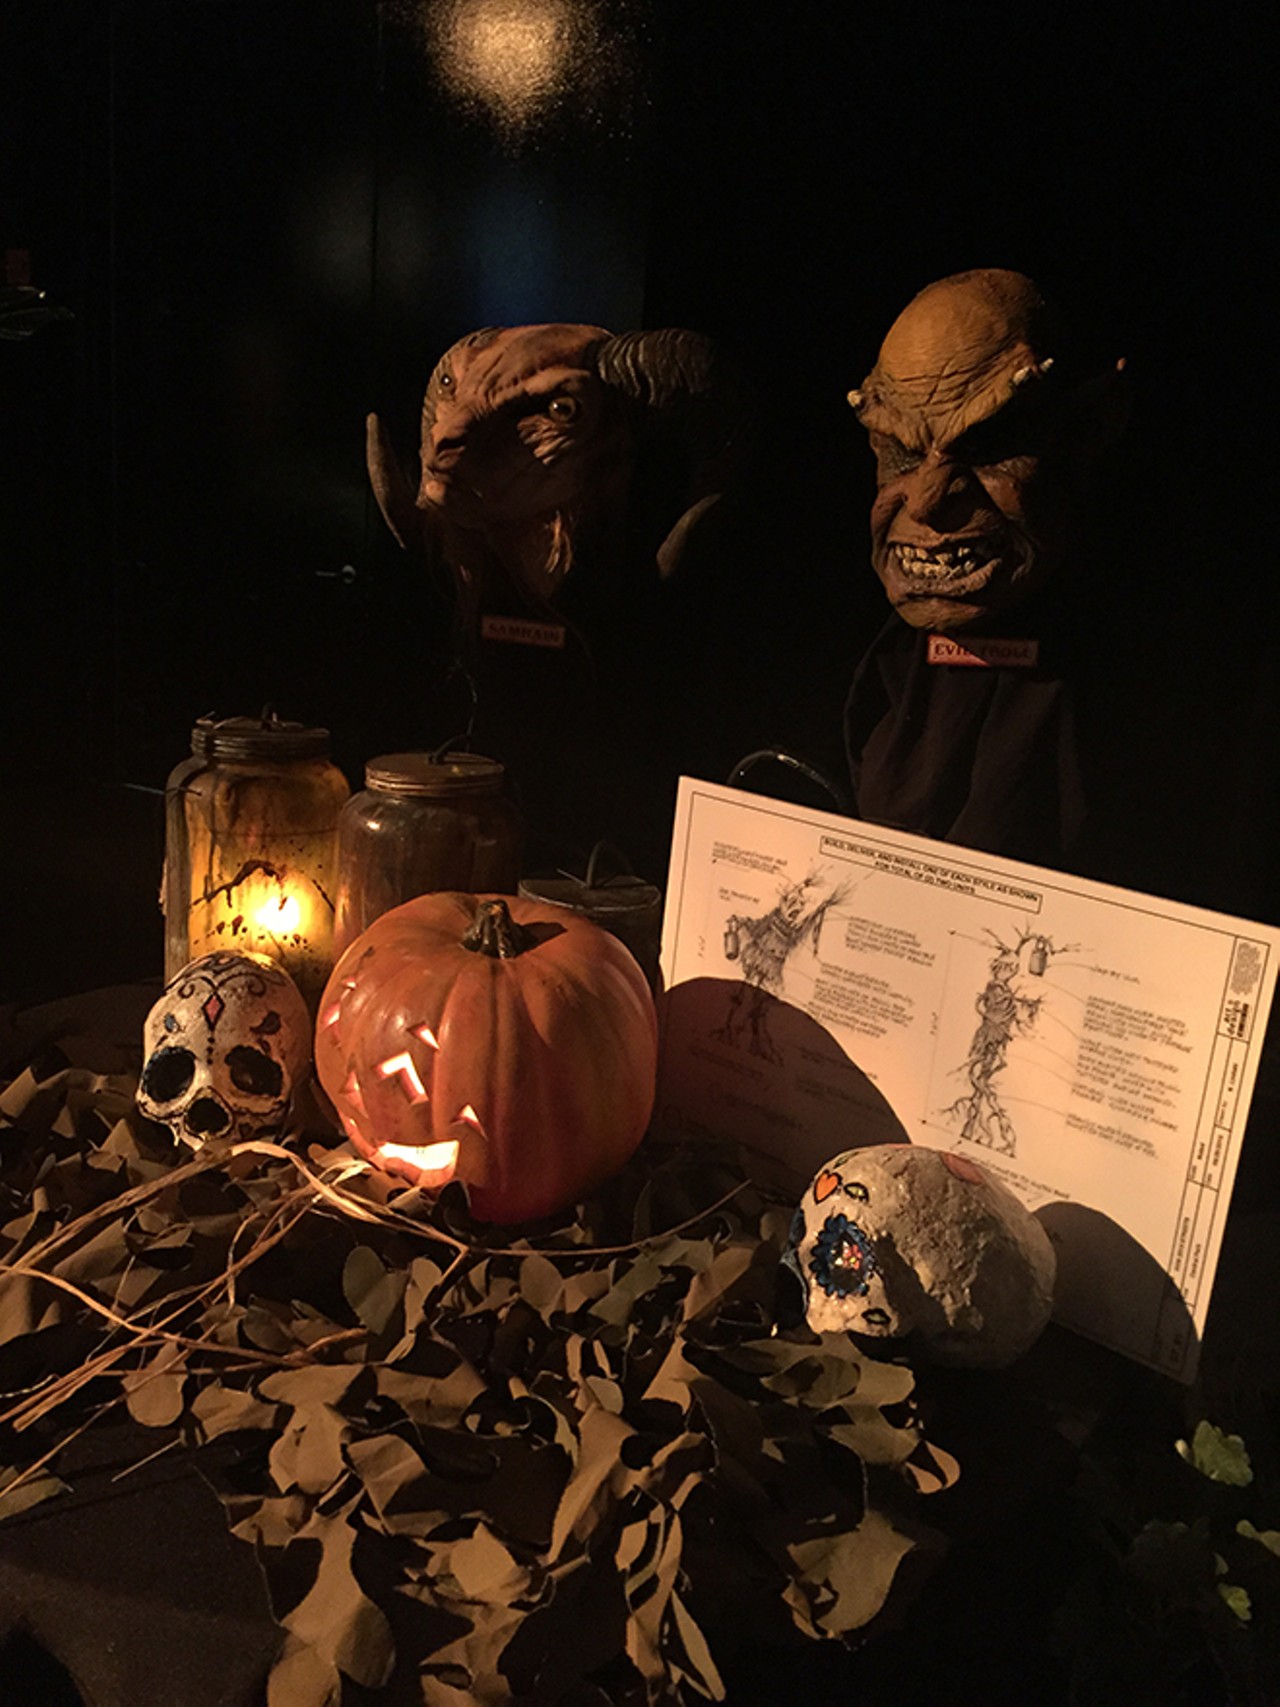 48 sneak peek photos from Universal's Halloween Horror Nights 25